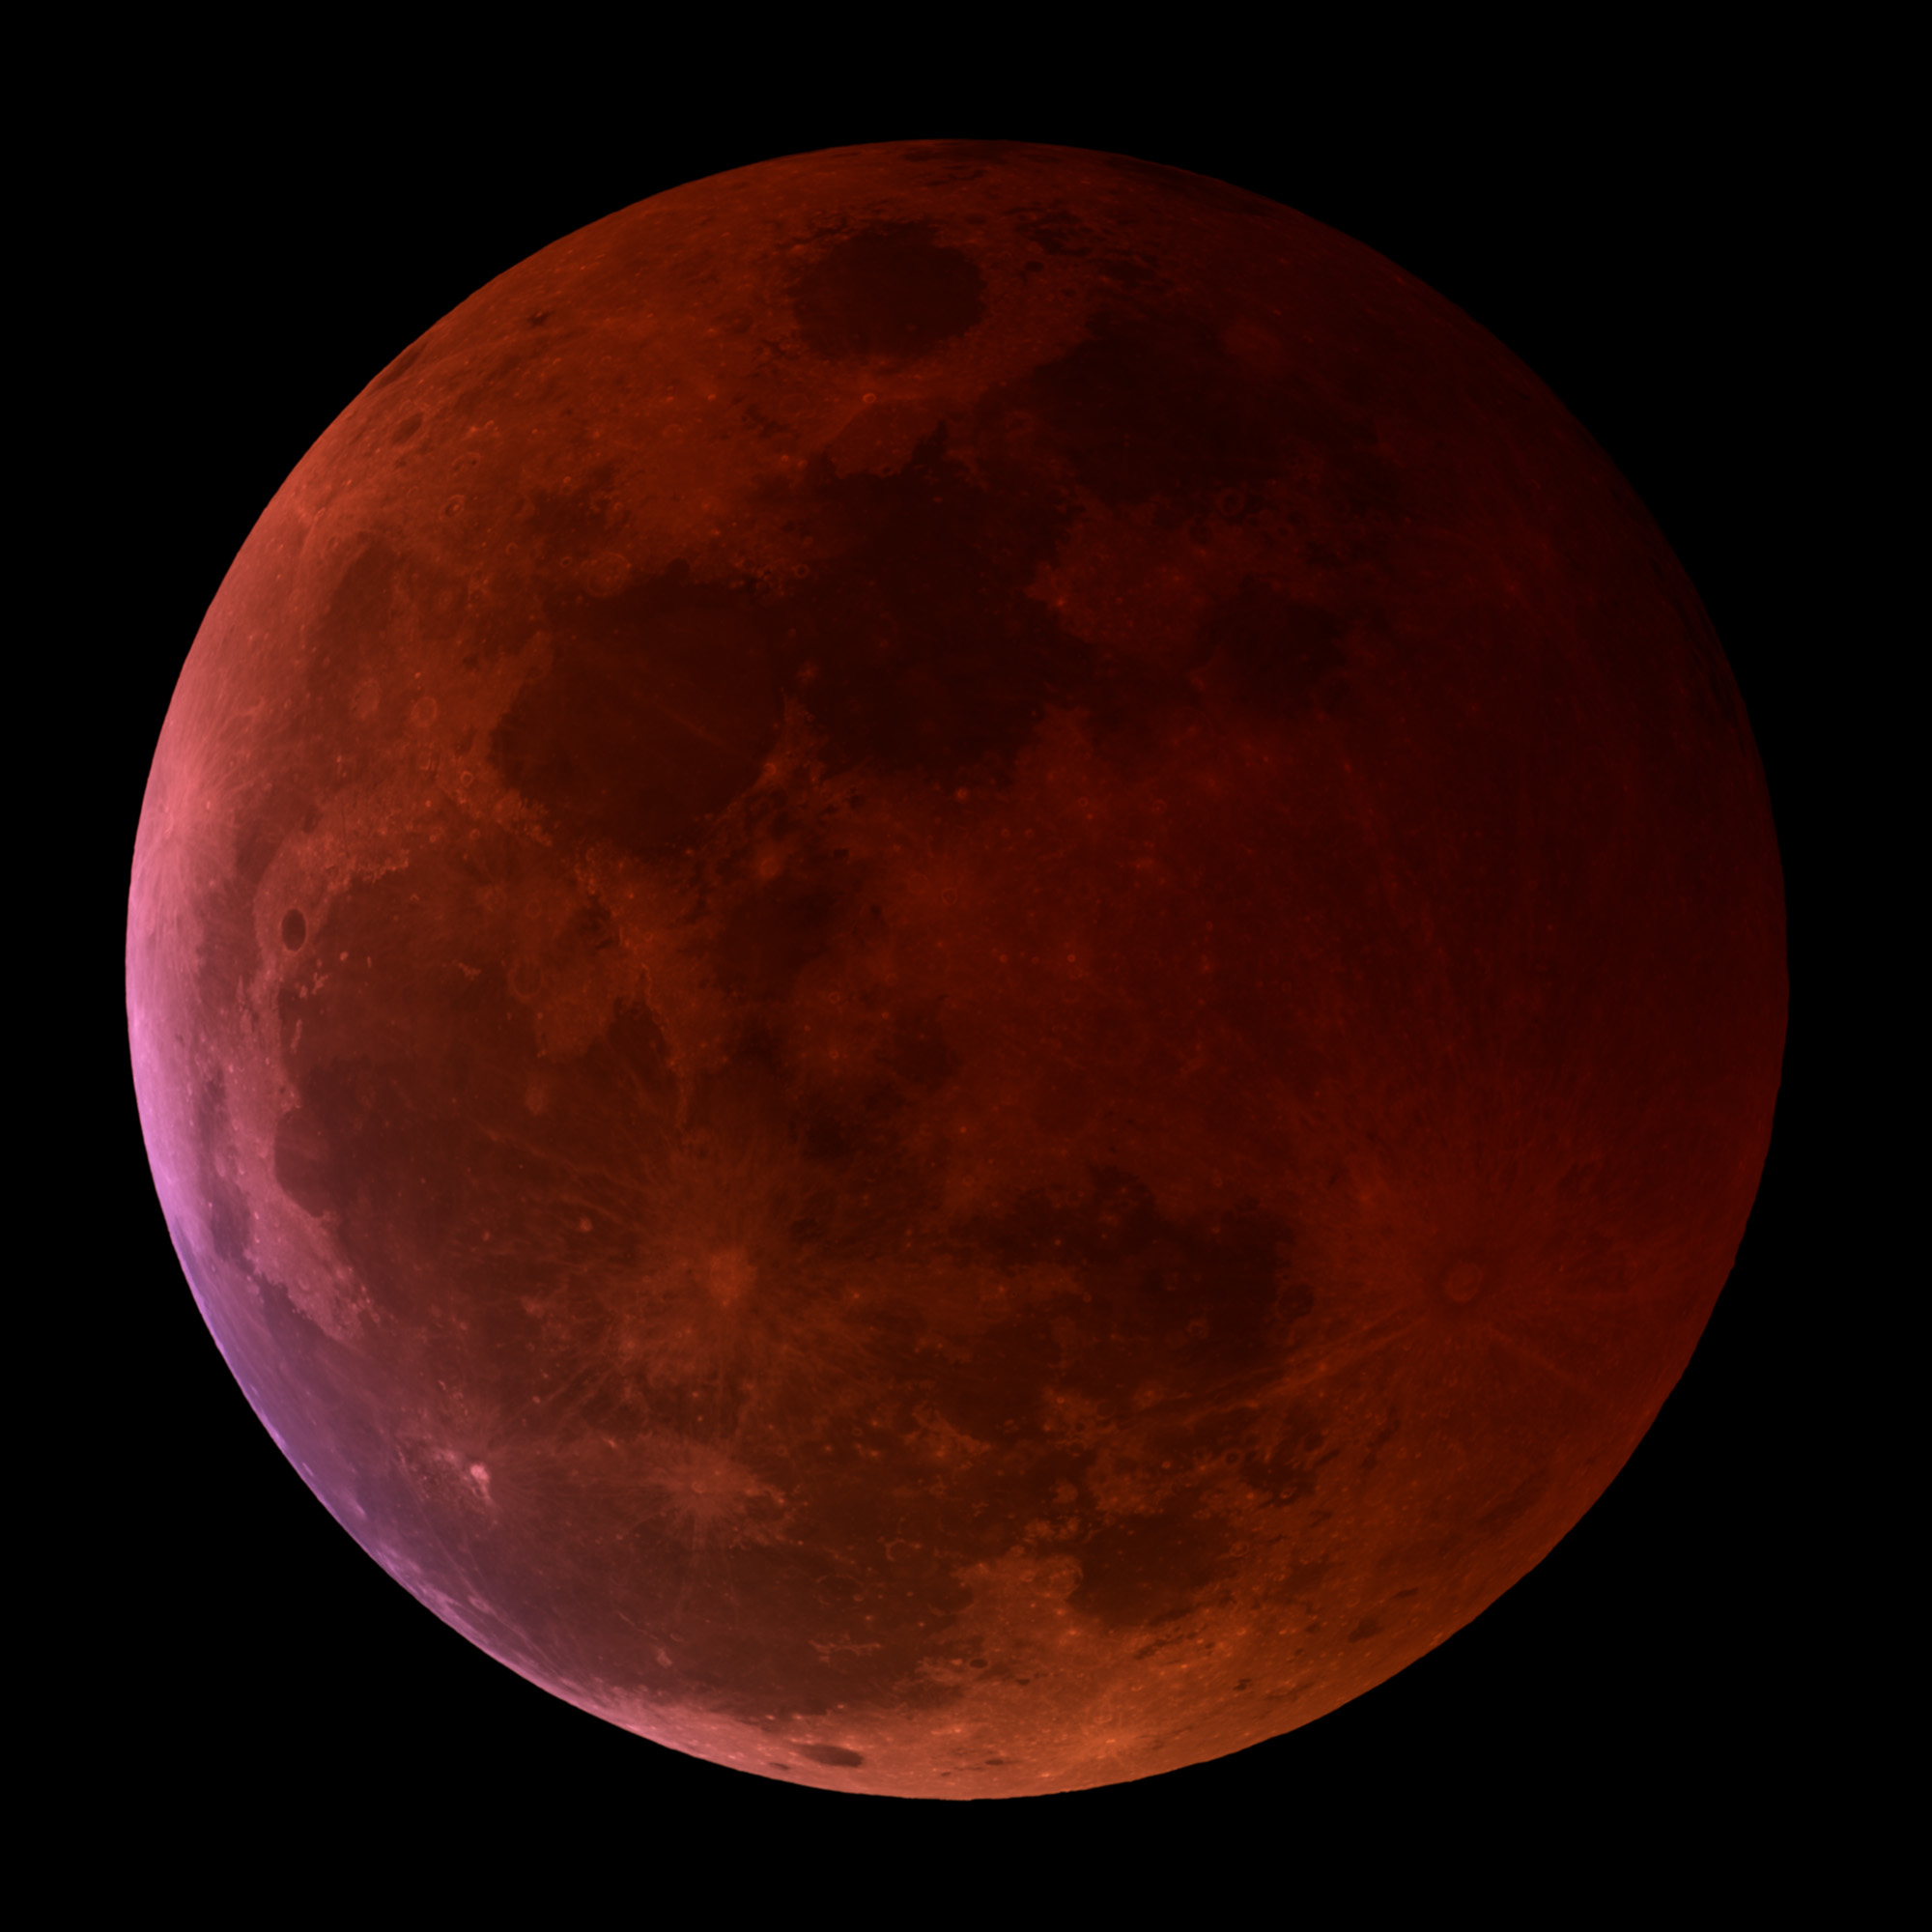 Page(/bonus/20221108_lunar_eclipse/index.md)